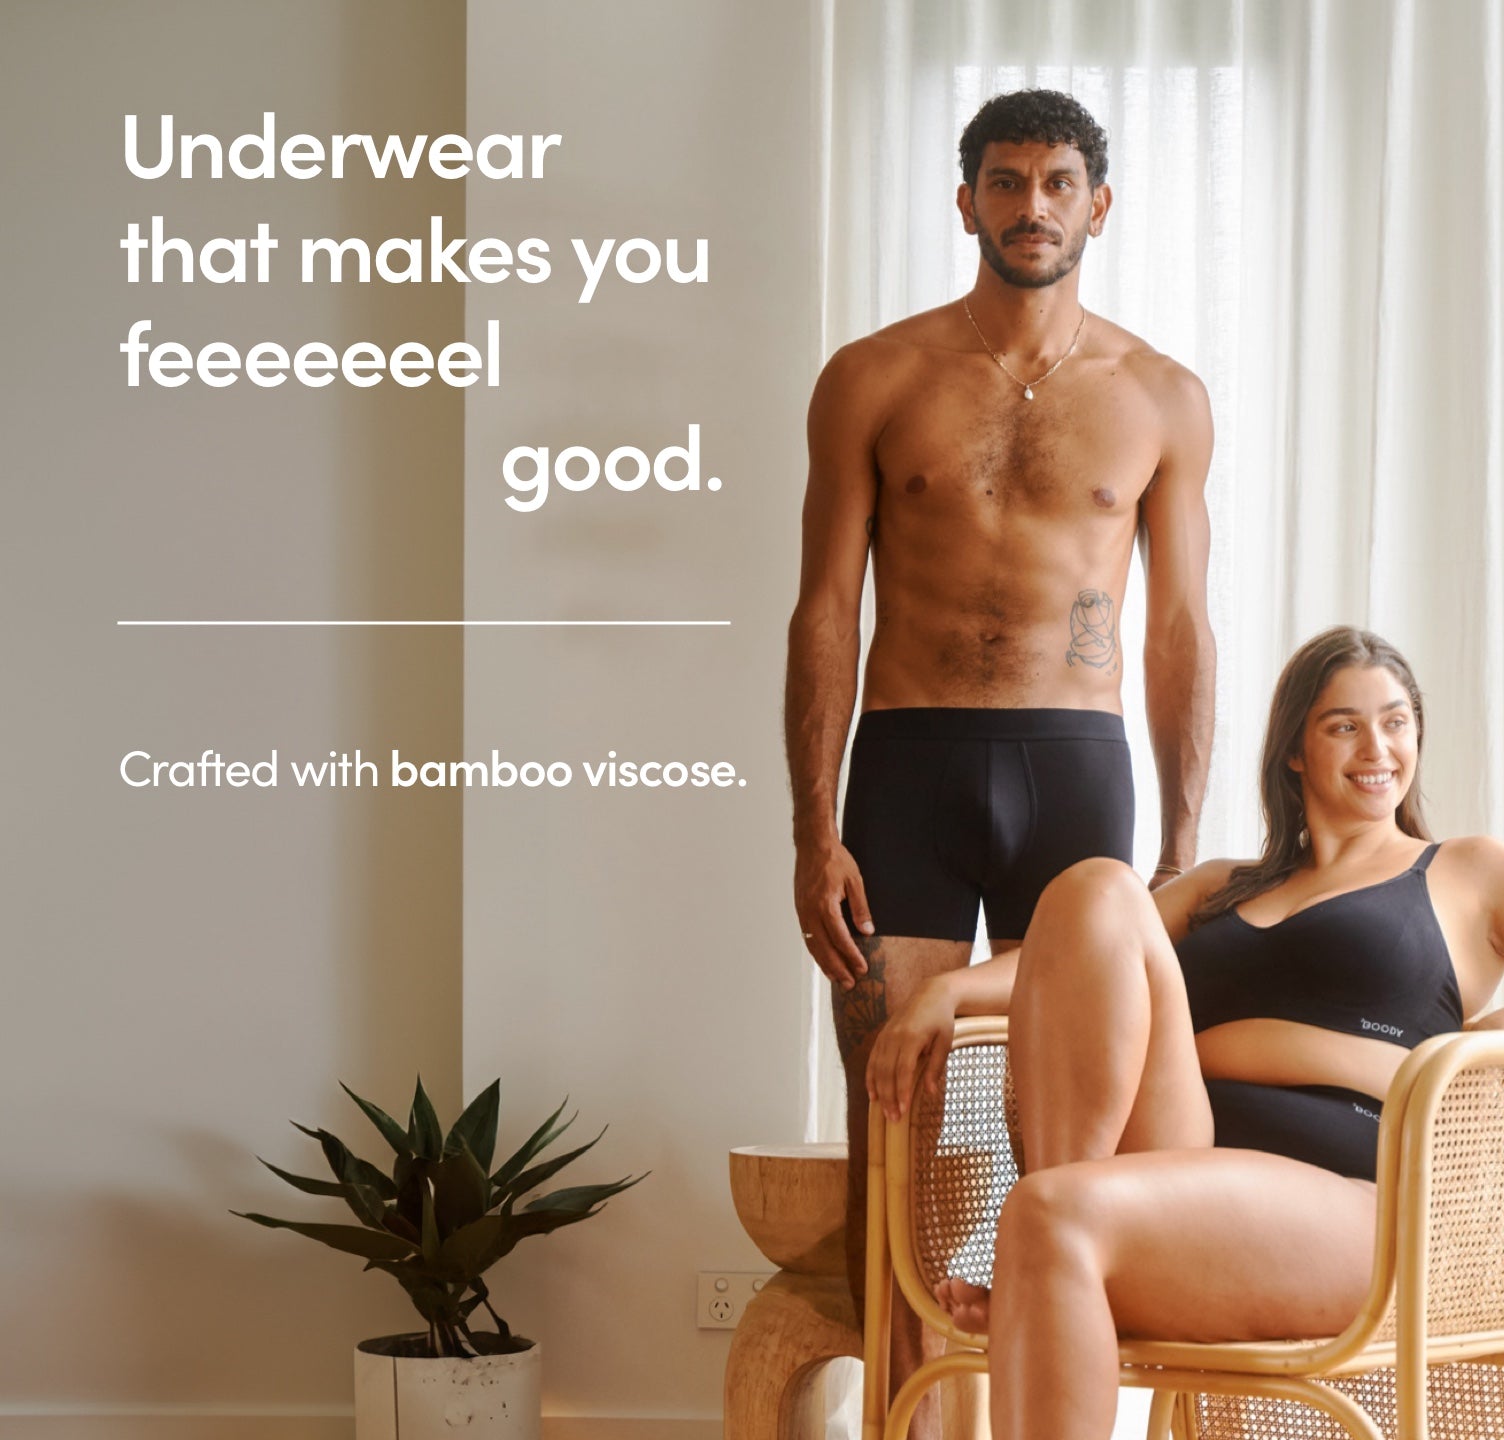 Girl's Bamboo Underwear 7-Pack: Fall